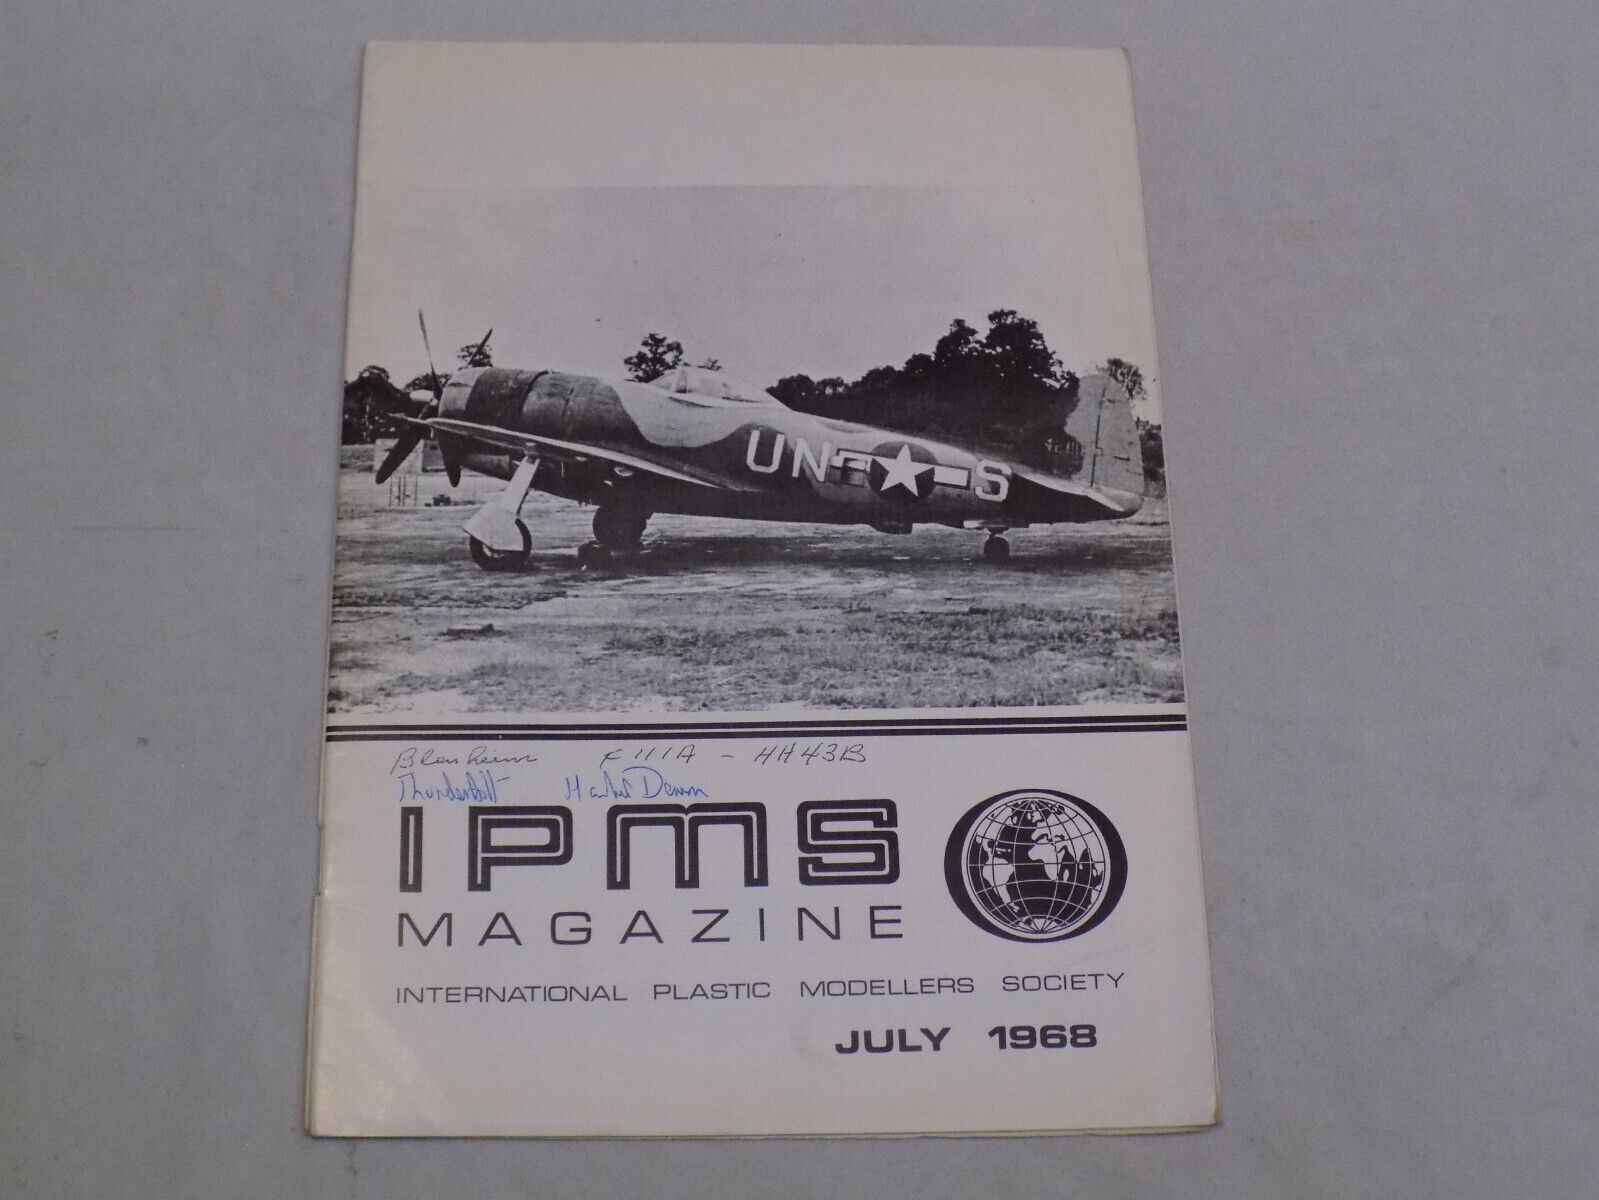 IPMS Magazine Jul 1968 International Plastic Modellers Society Blenheim Airplane